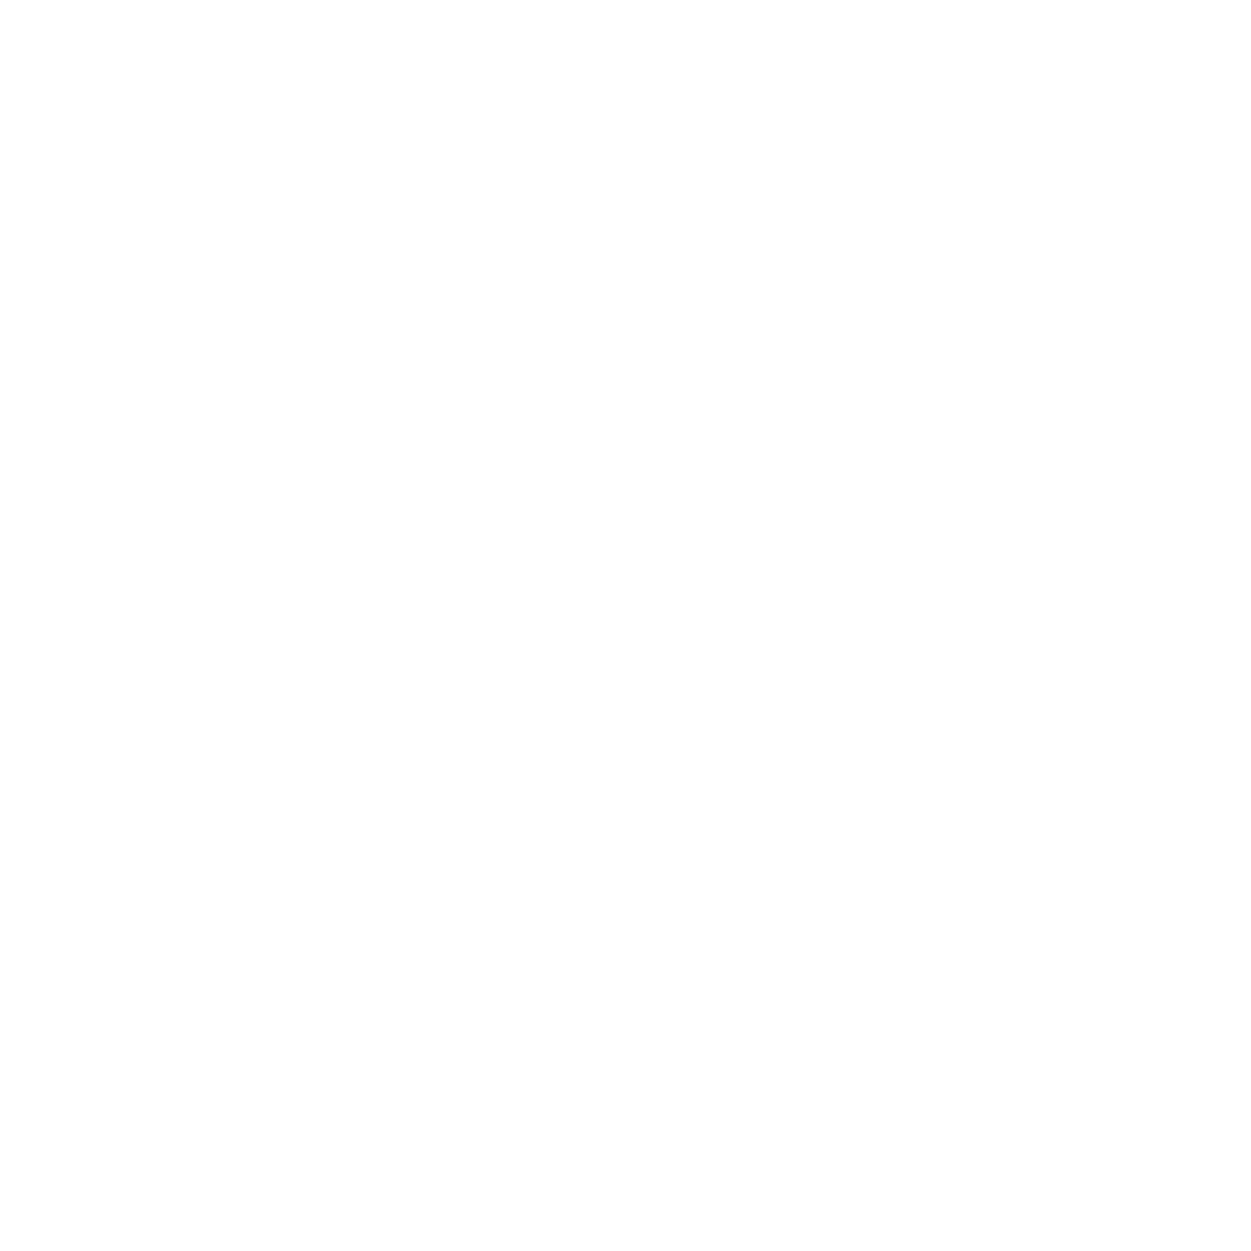 Orbis Terra Media – Grow Through Content